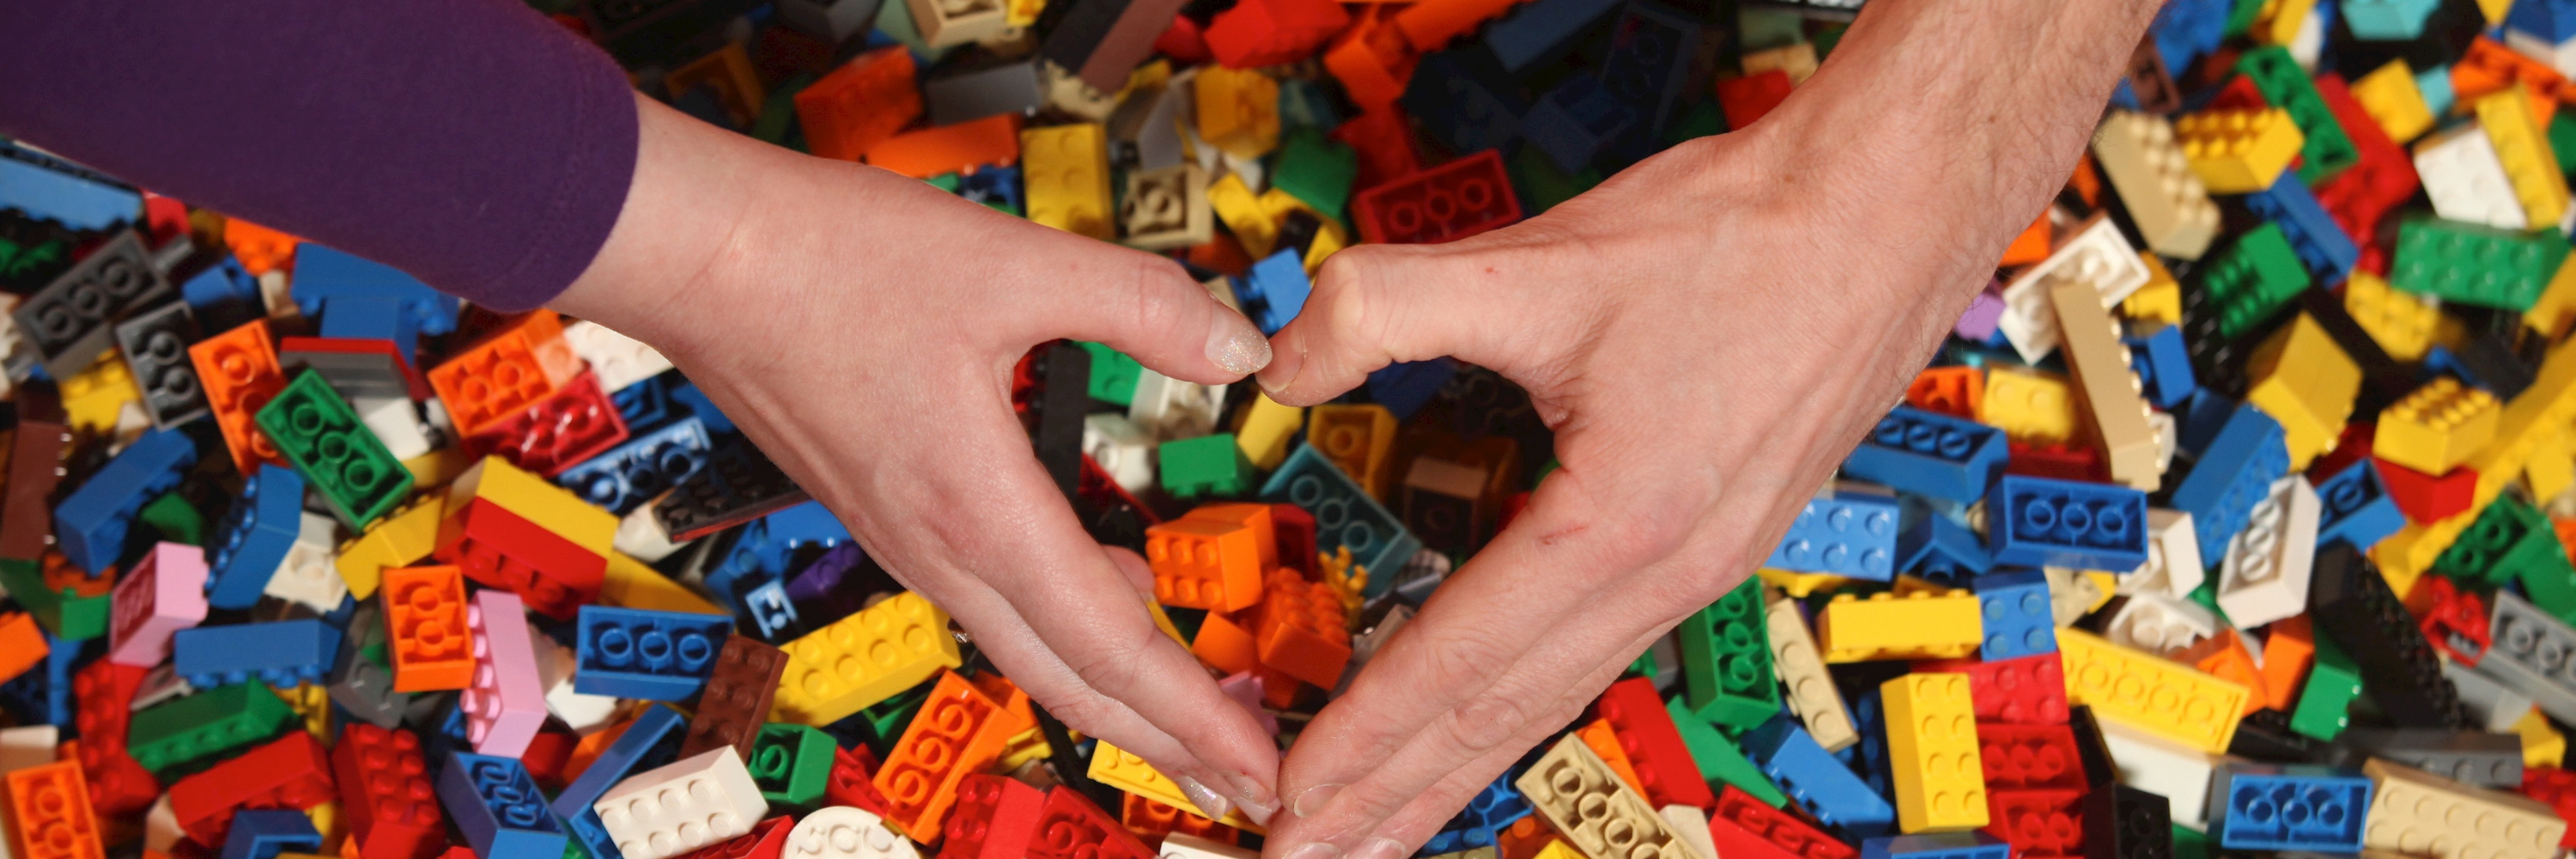 LEGO heart shape